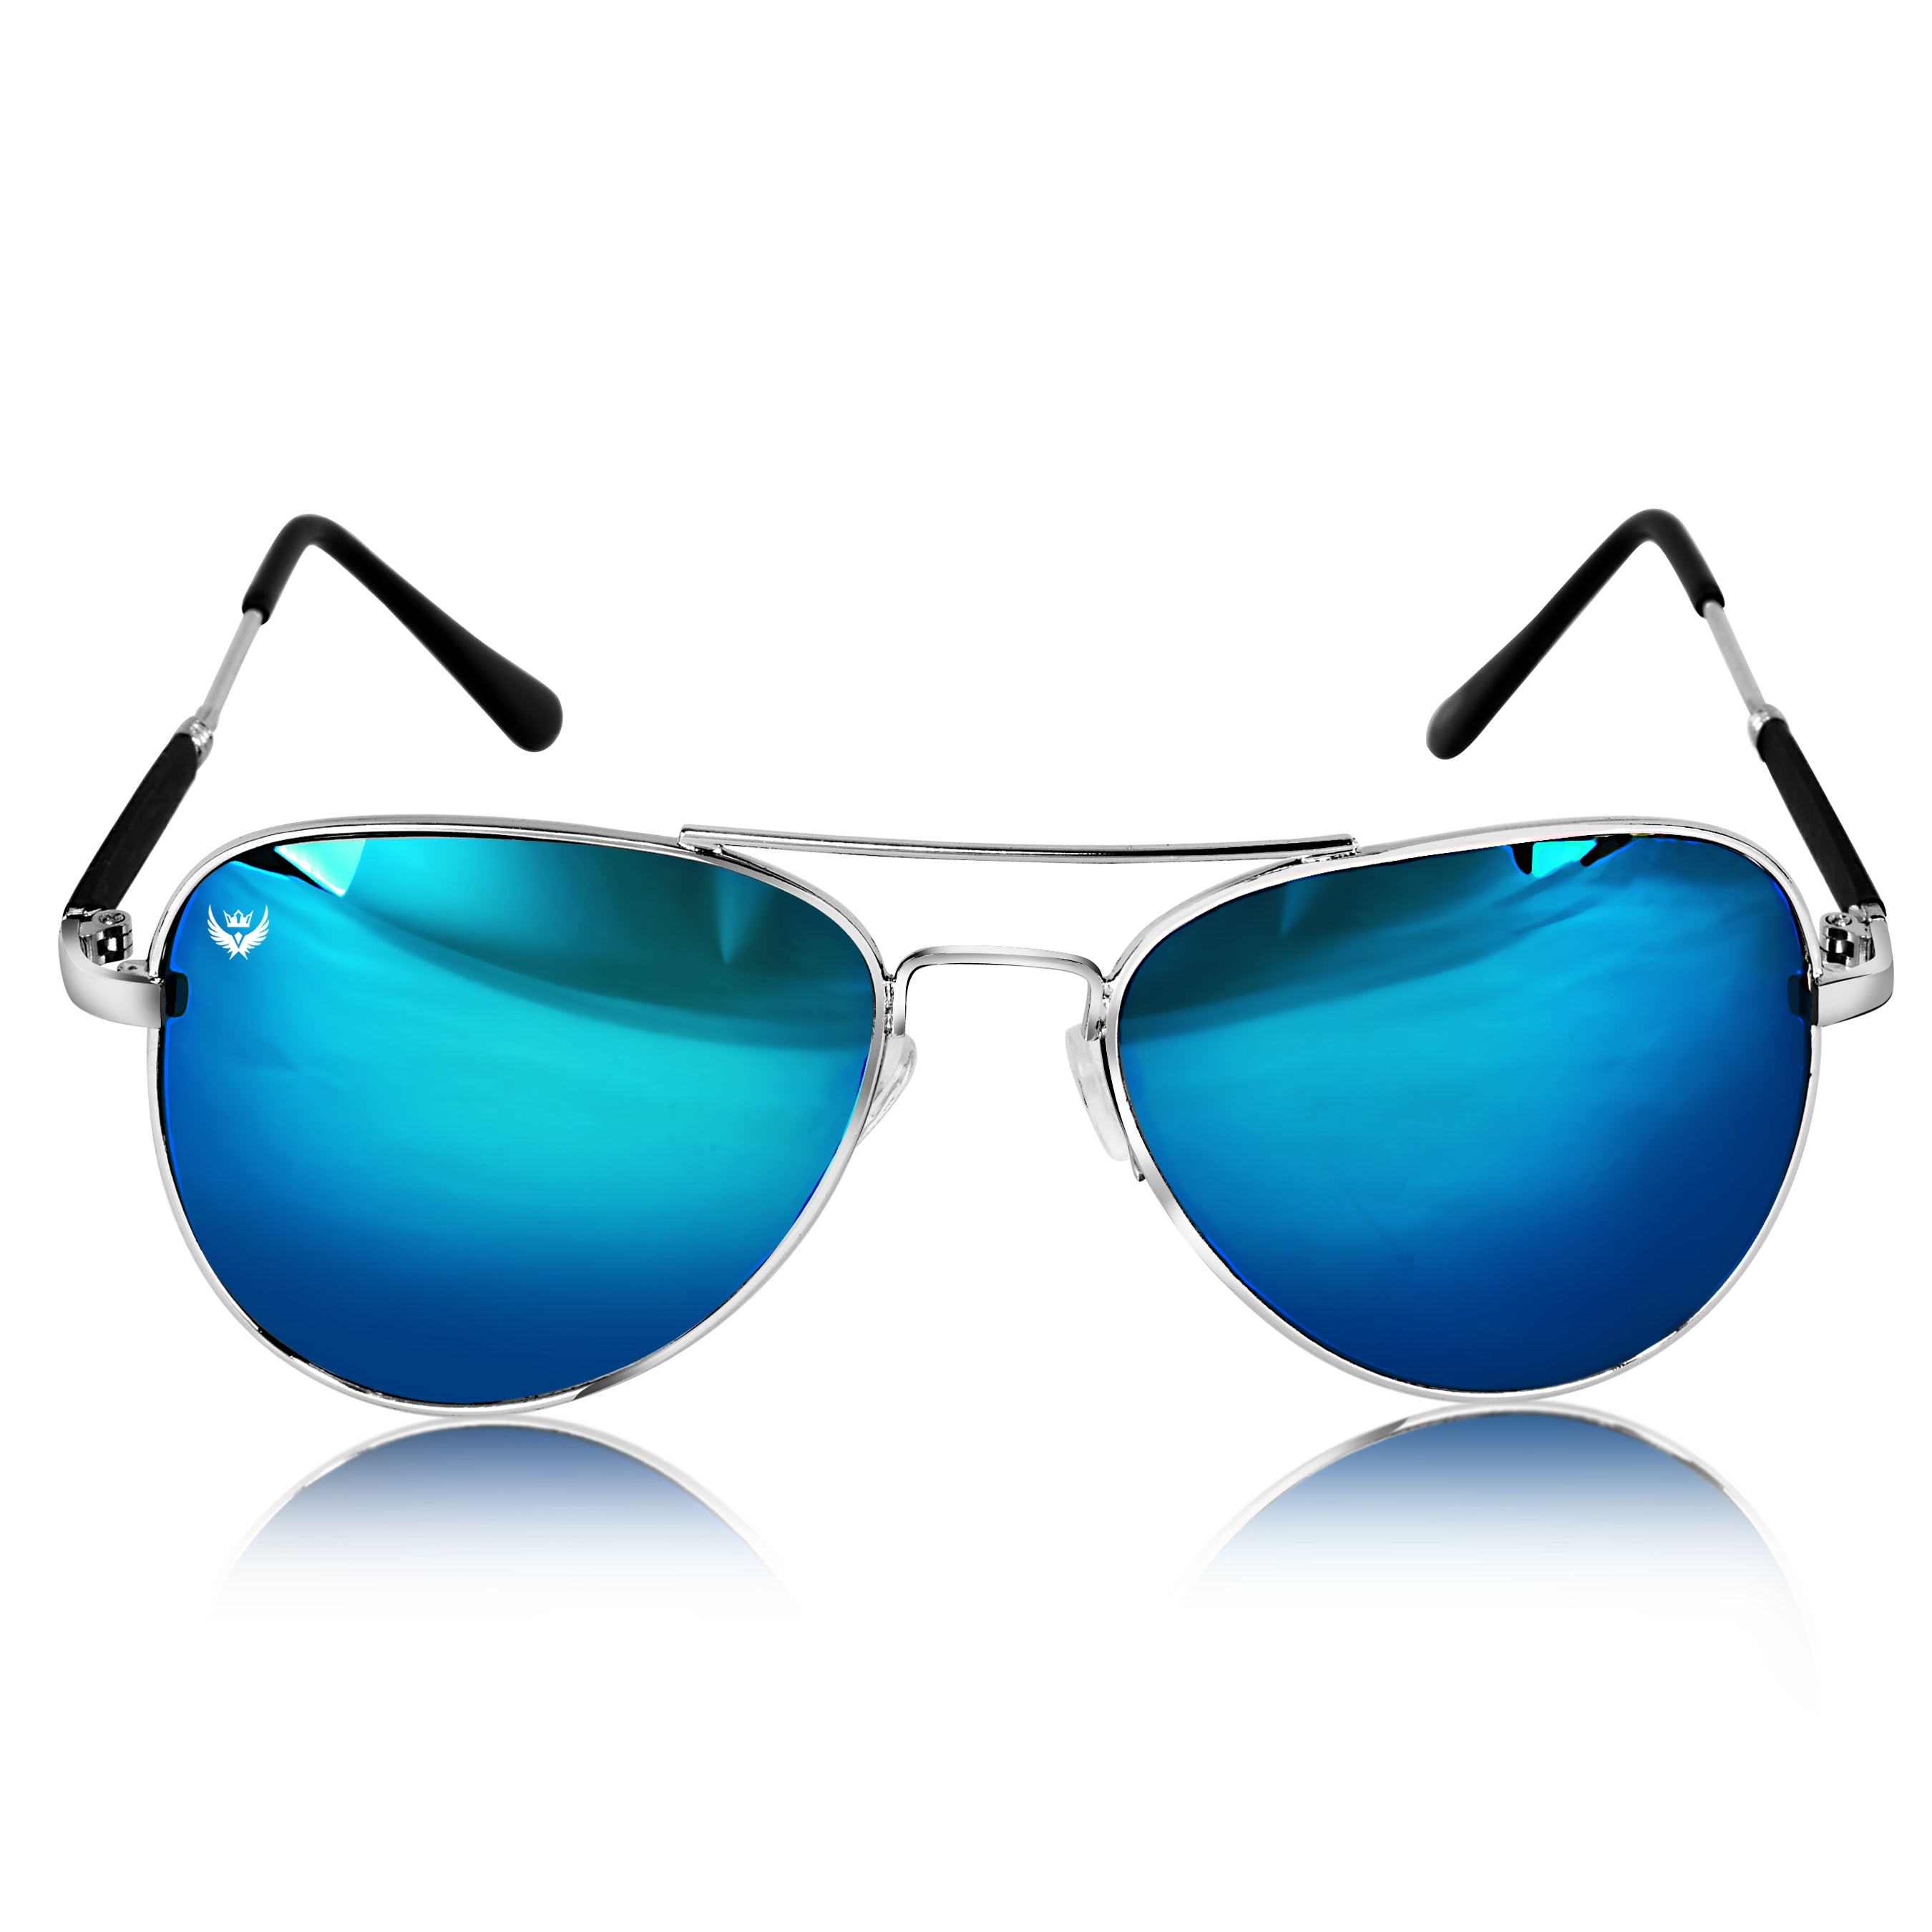 Lorenz Blue Reflector Sunglasses with a classic wayfarer style frame.